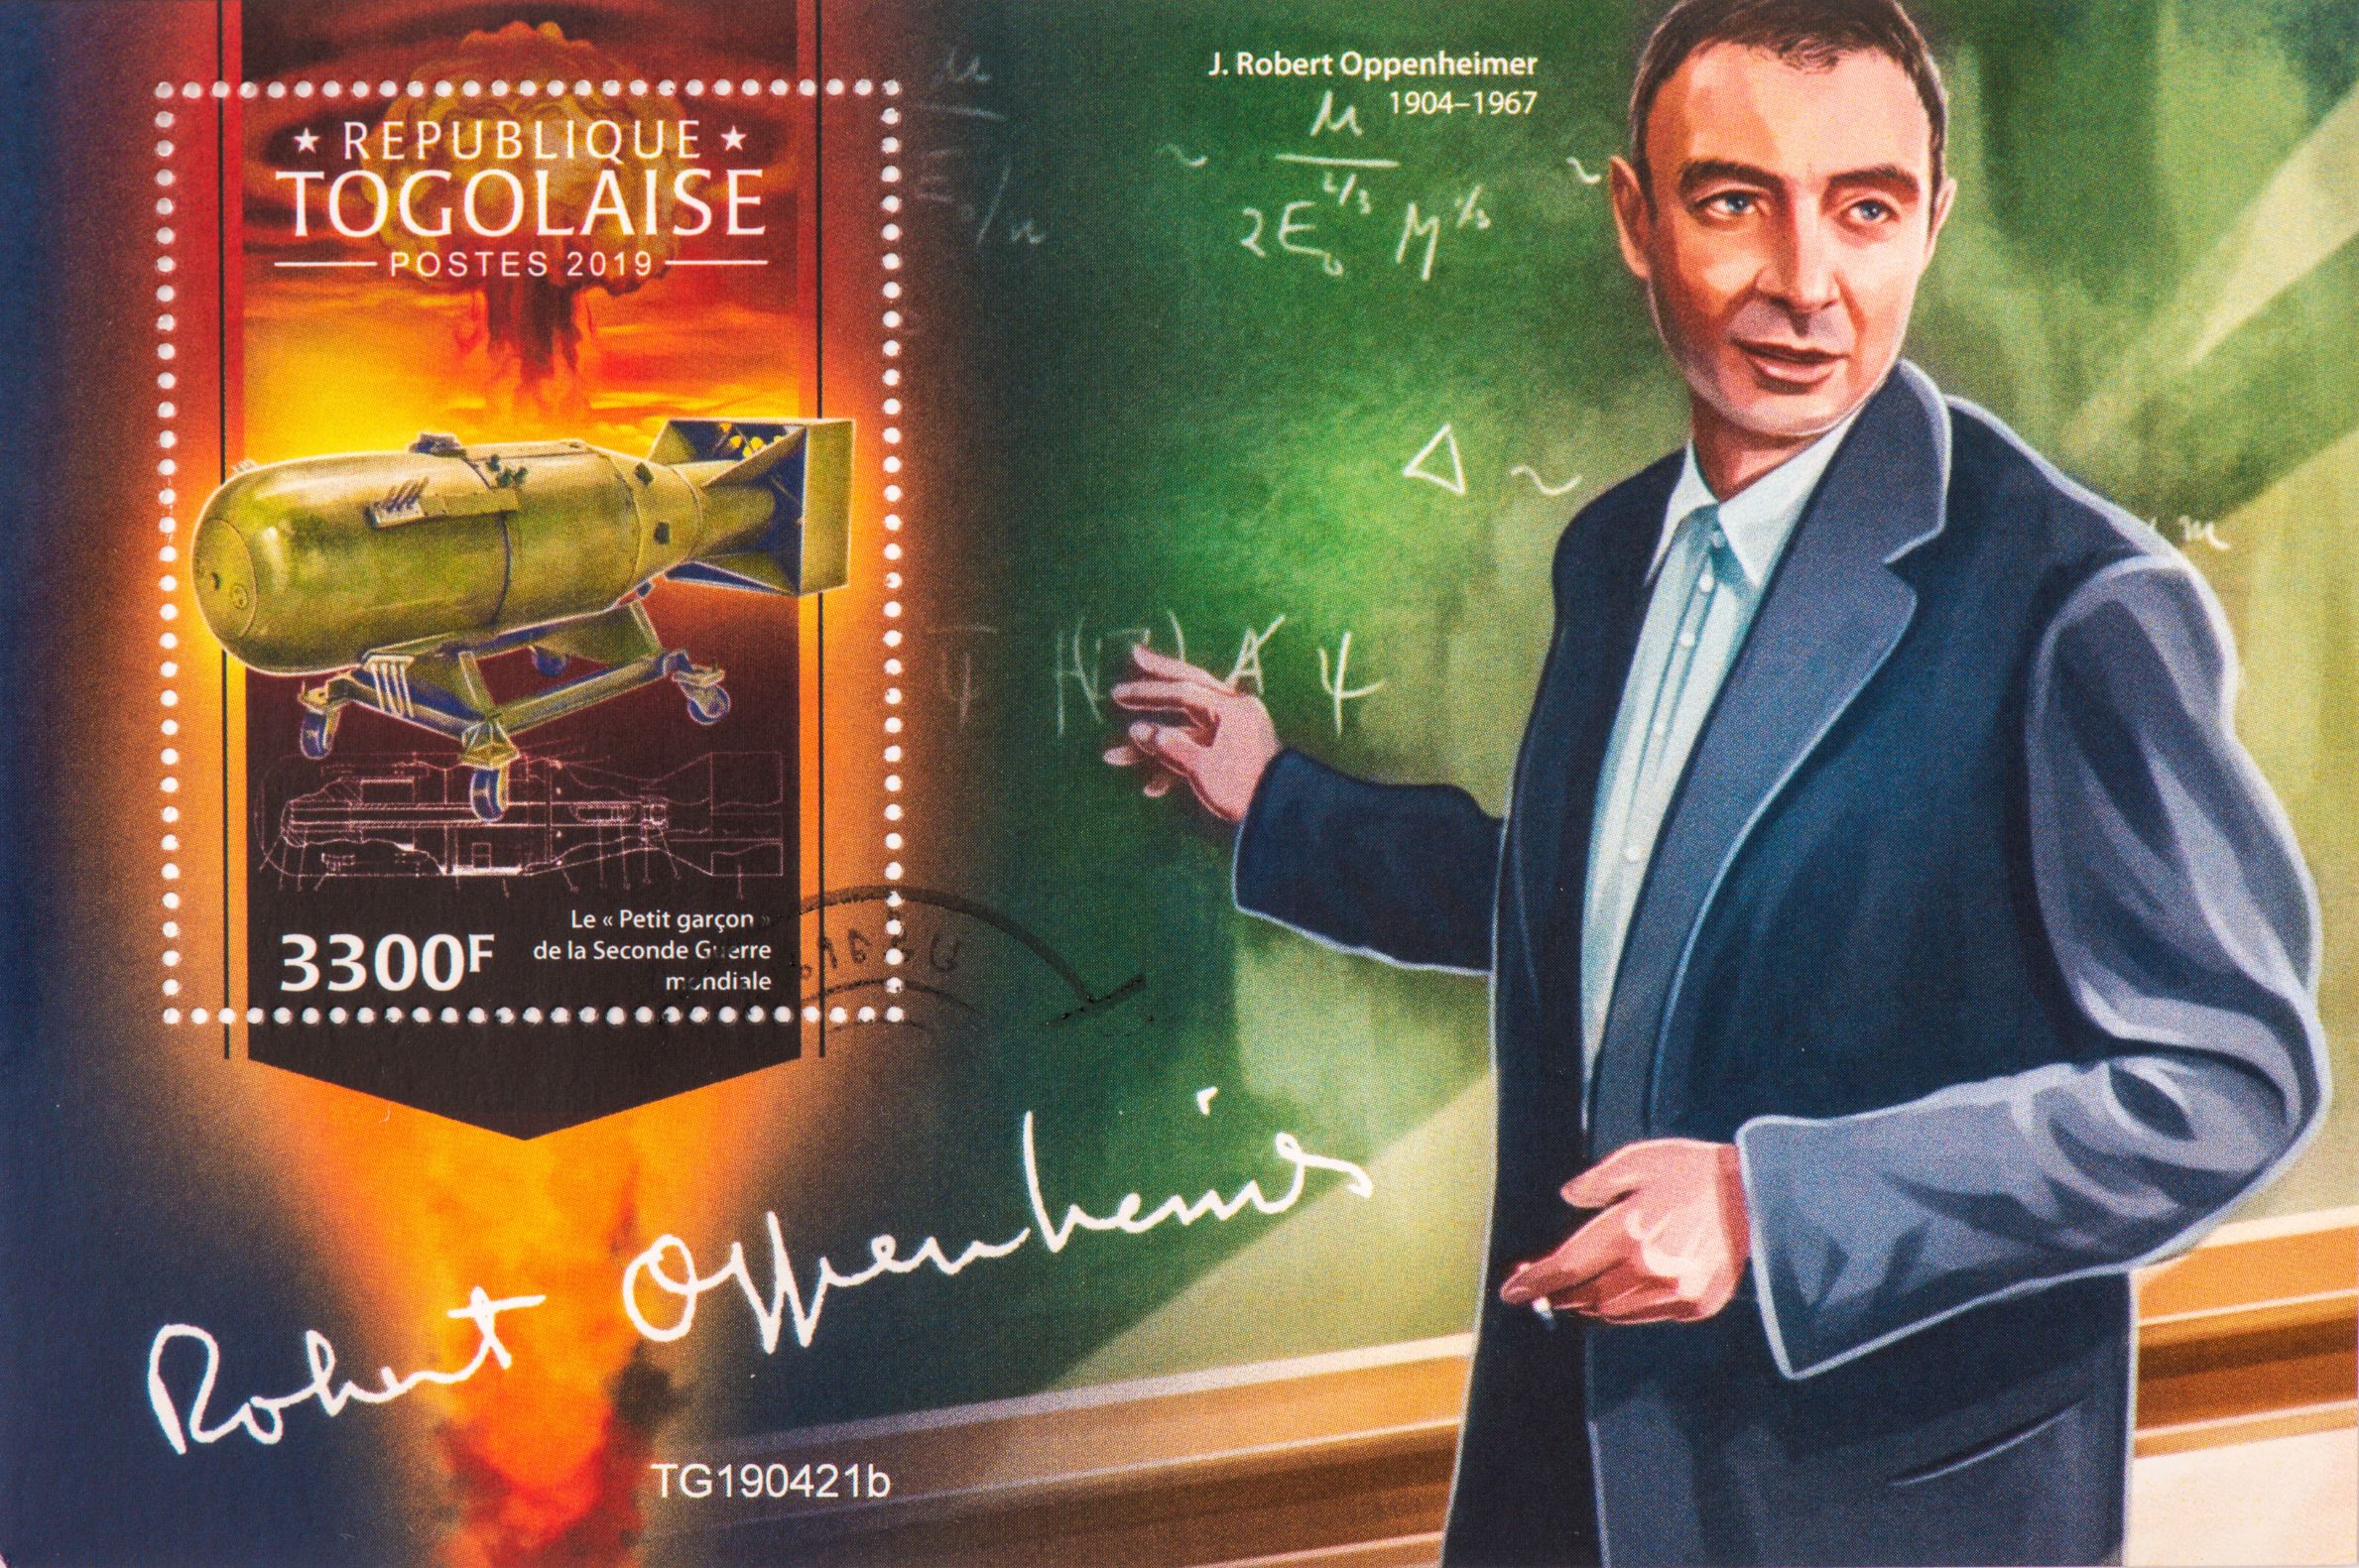 J. Robert Oppenheimer - Nuclear Atomic Manhattan Science. - Stamp Souvenir Sheet of Togo - 2019. Bangkok-Thailand, September 9, 2022.